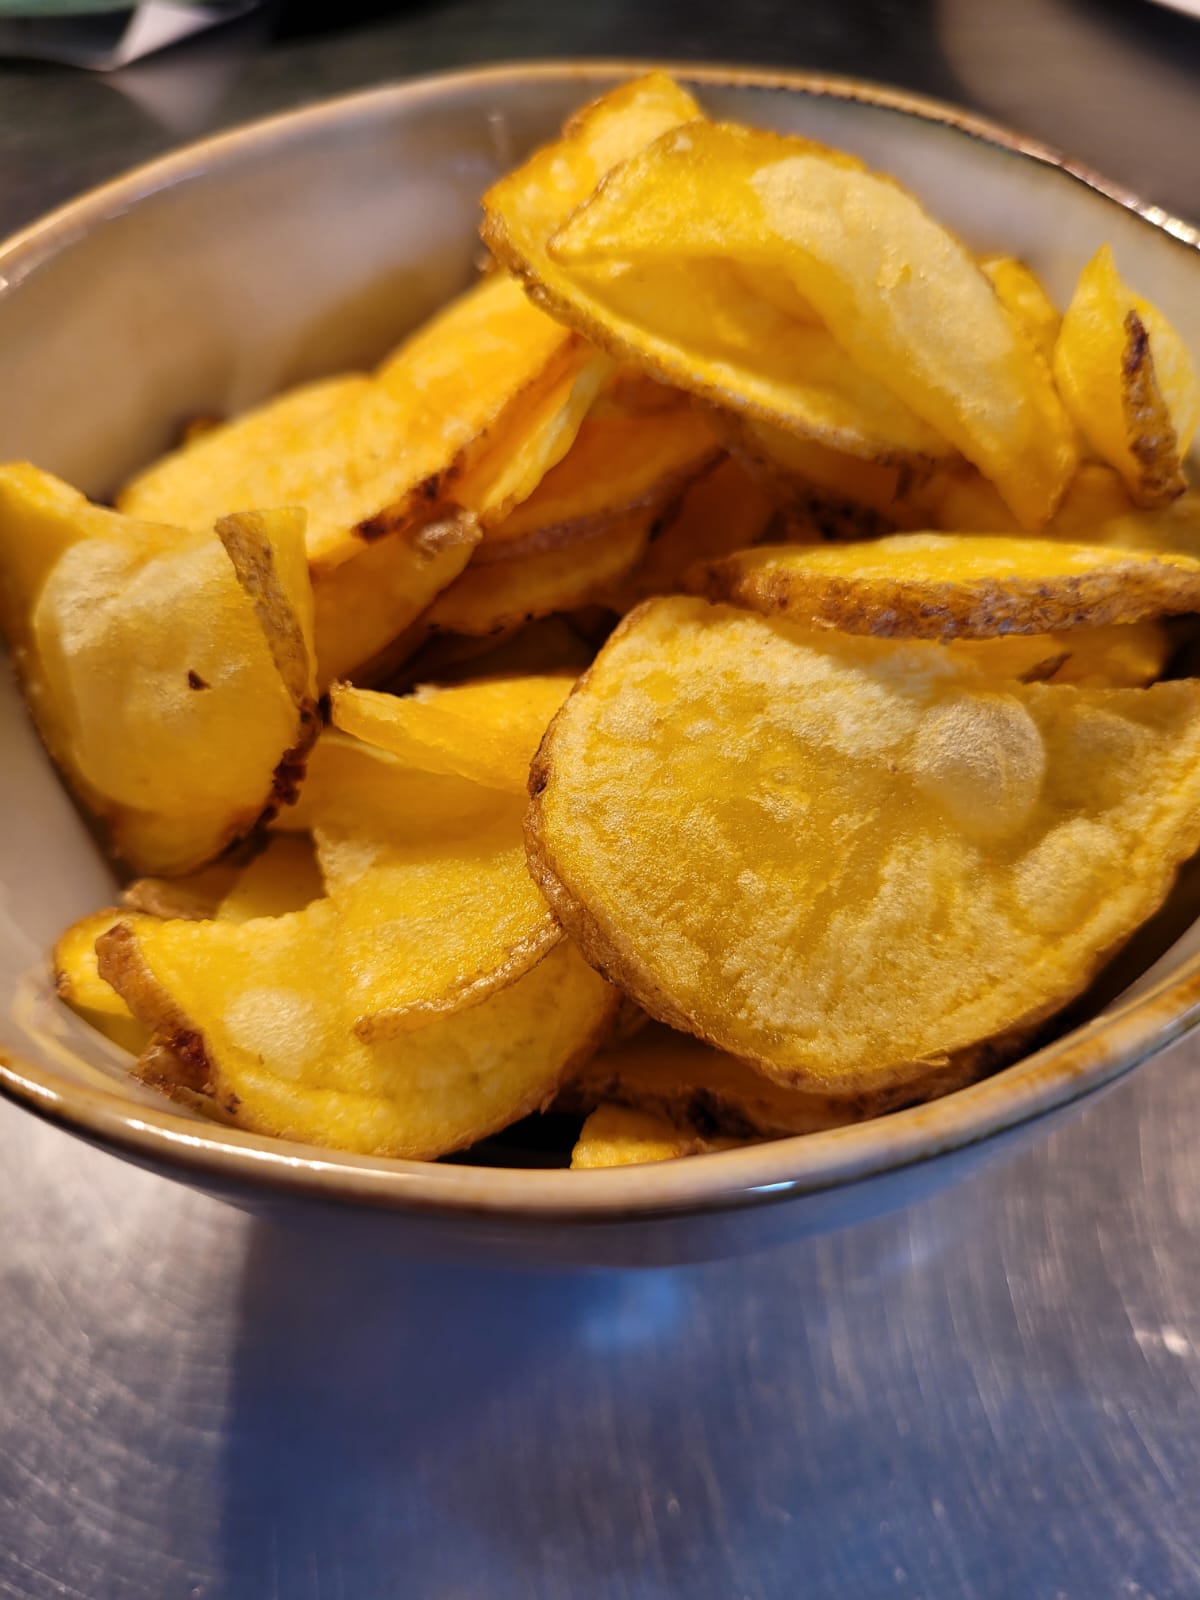 Natural potato chips